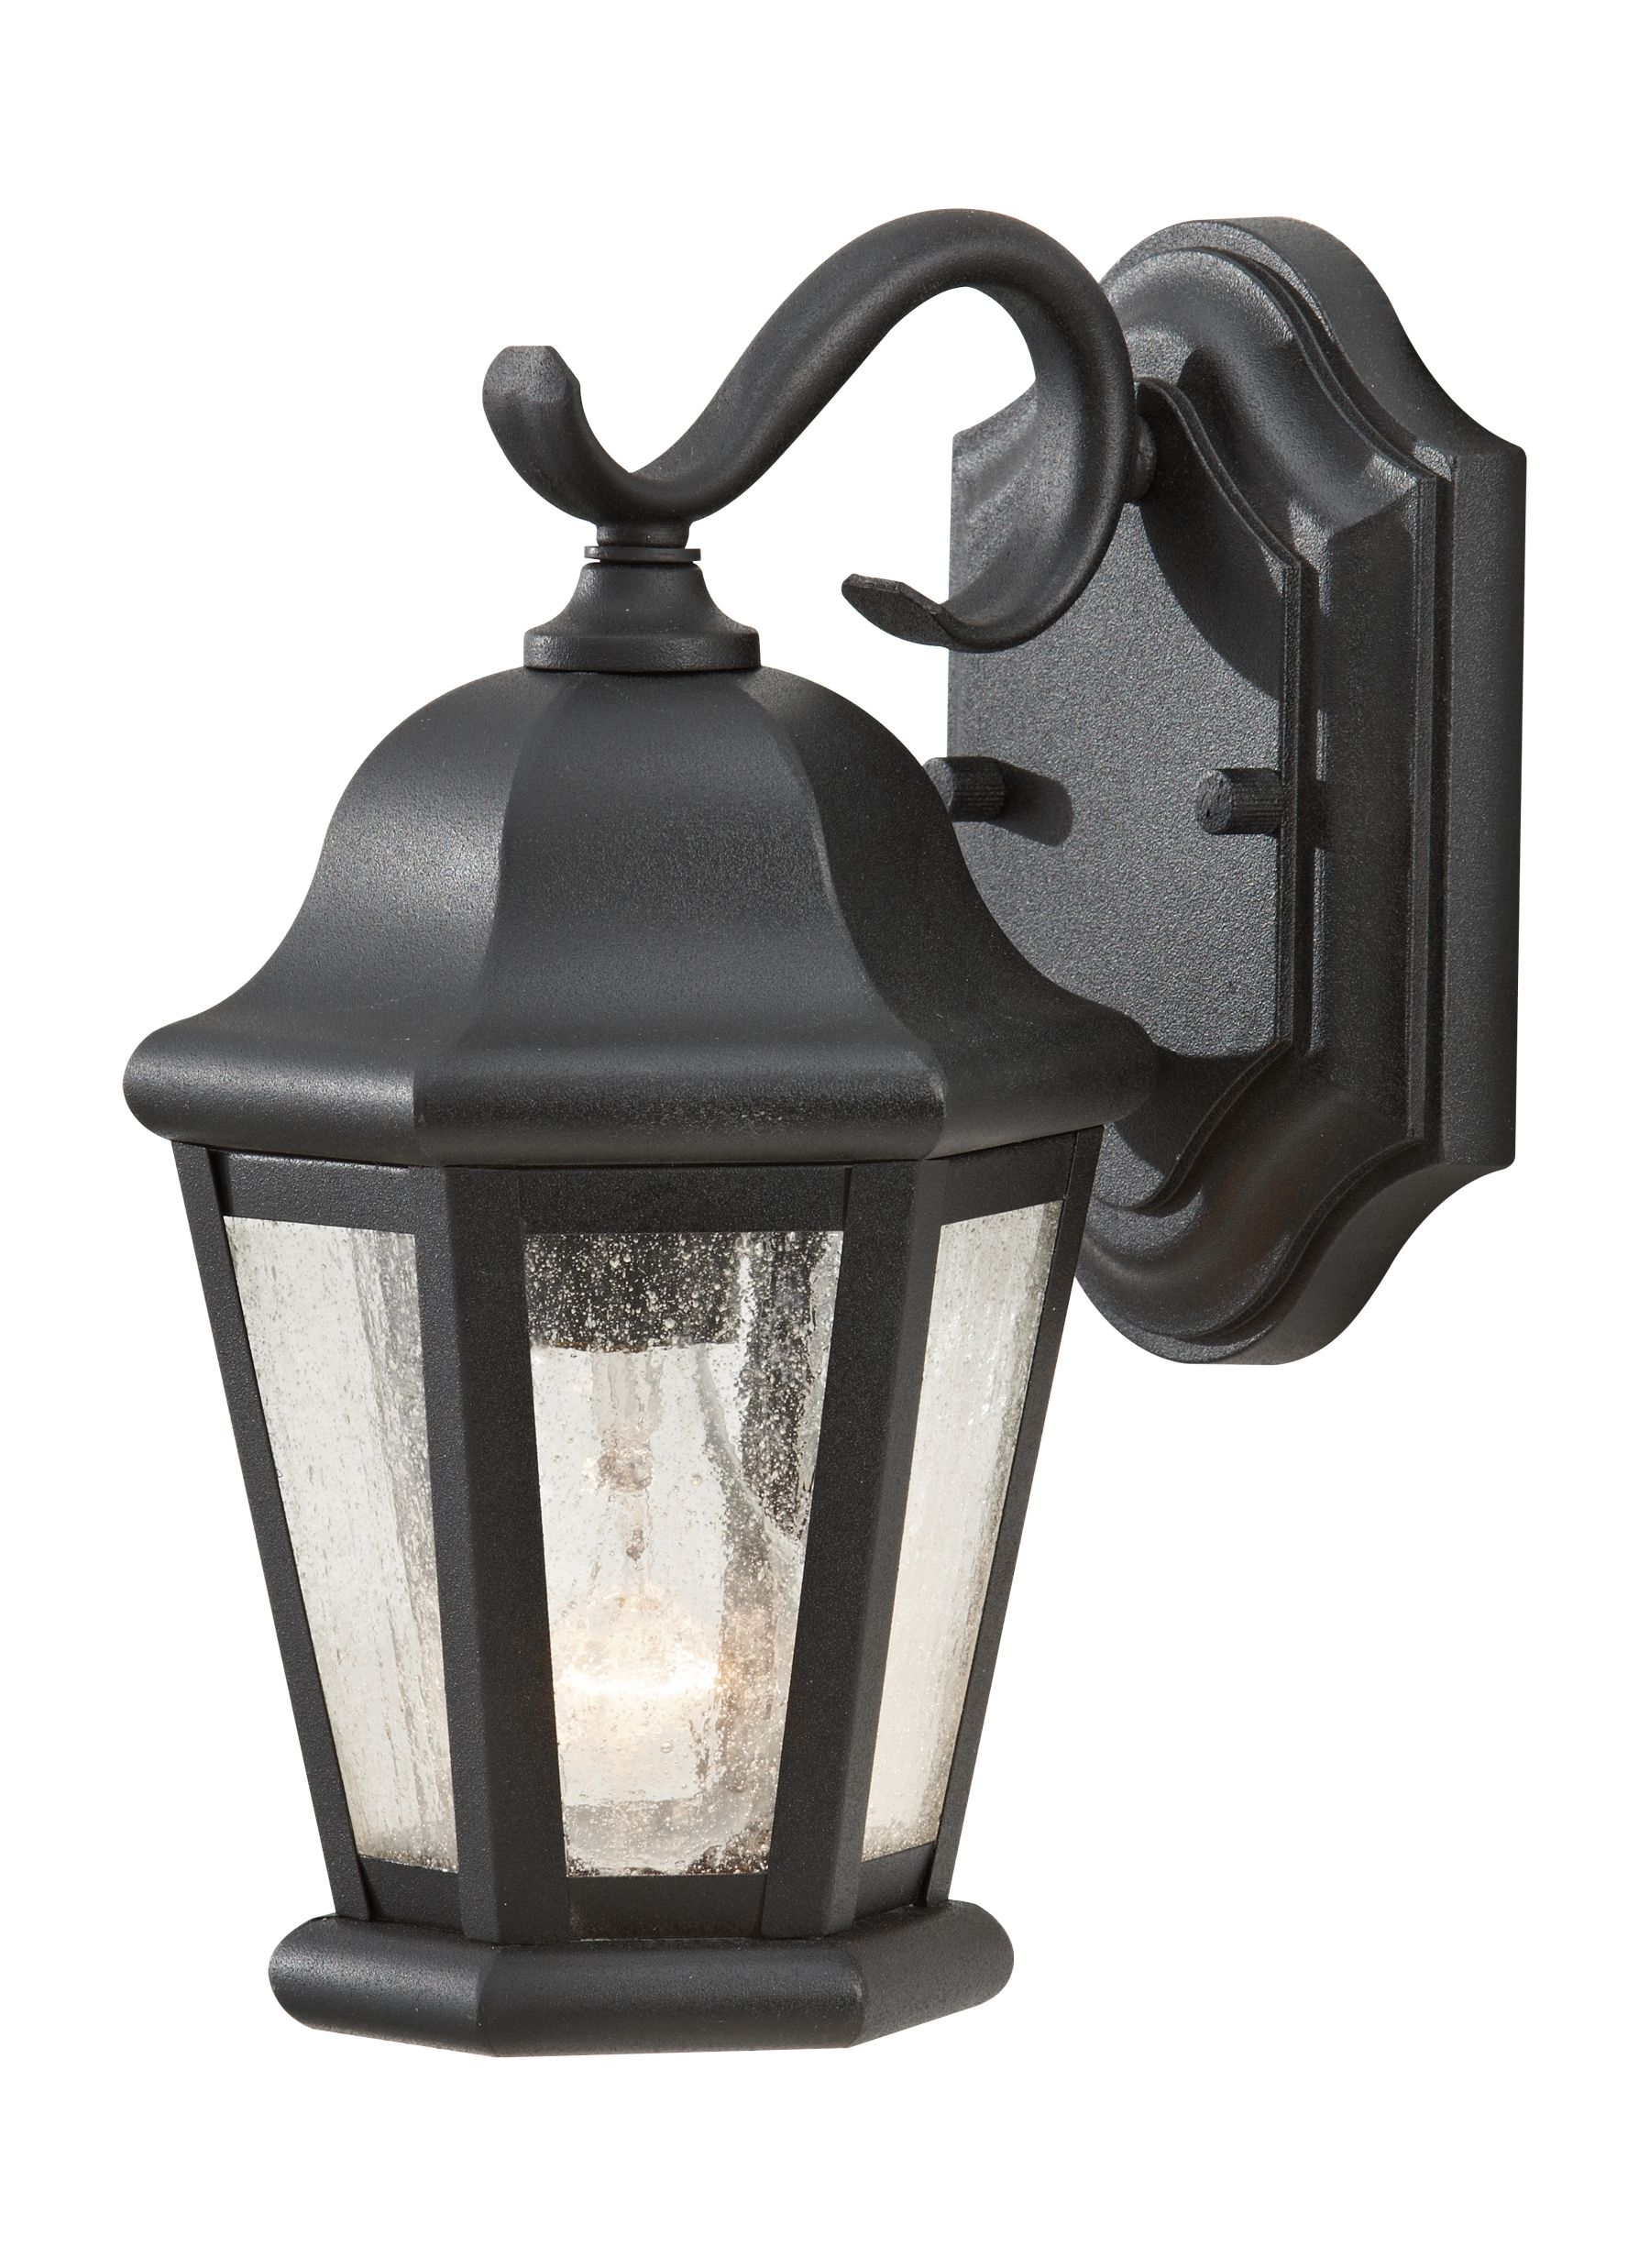 Ol5900bk,1 Light Outdoor Lantern,black In Outdoor Lanterns Lights (View 18 of 20)